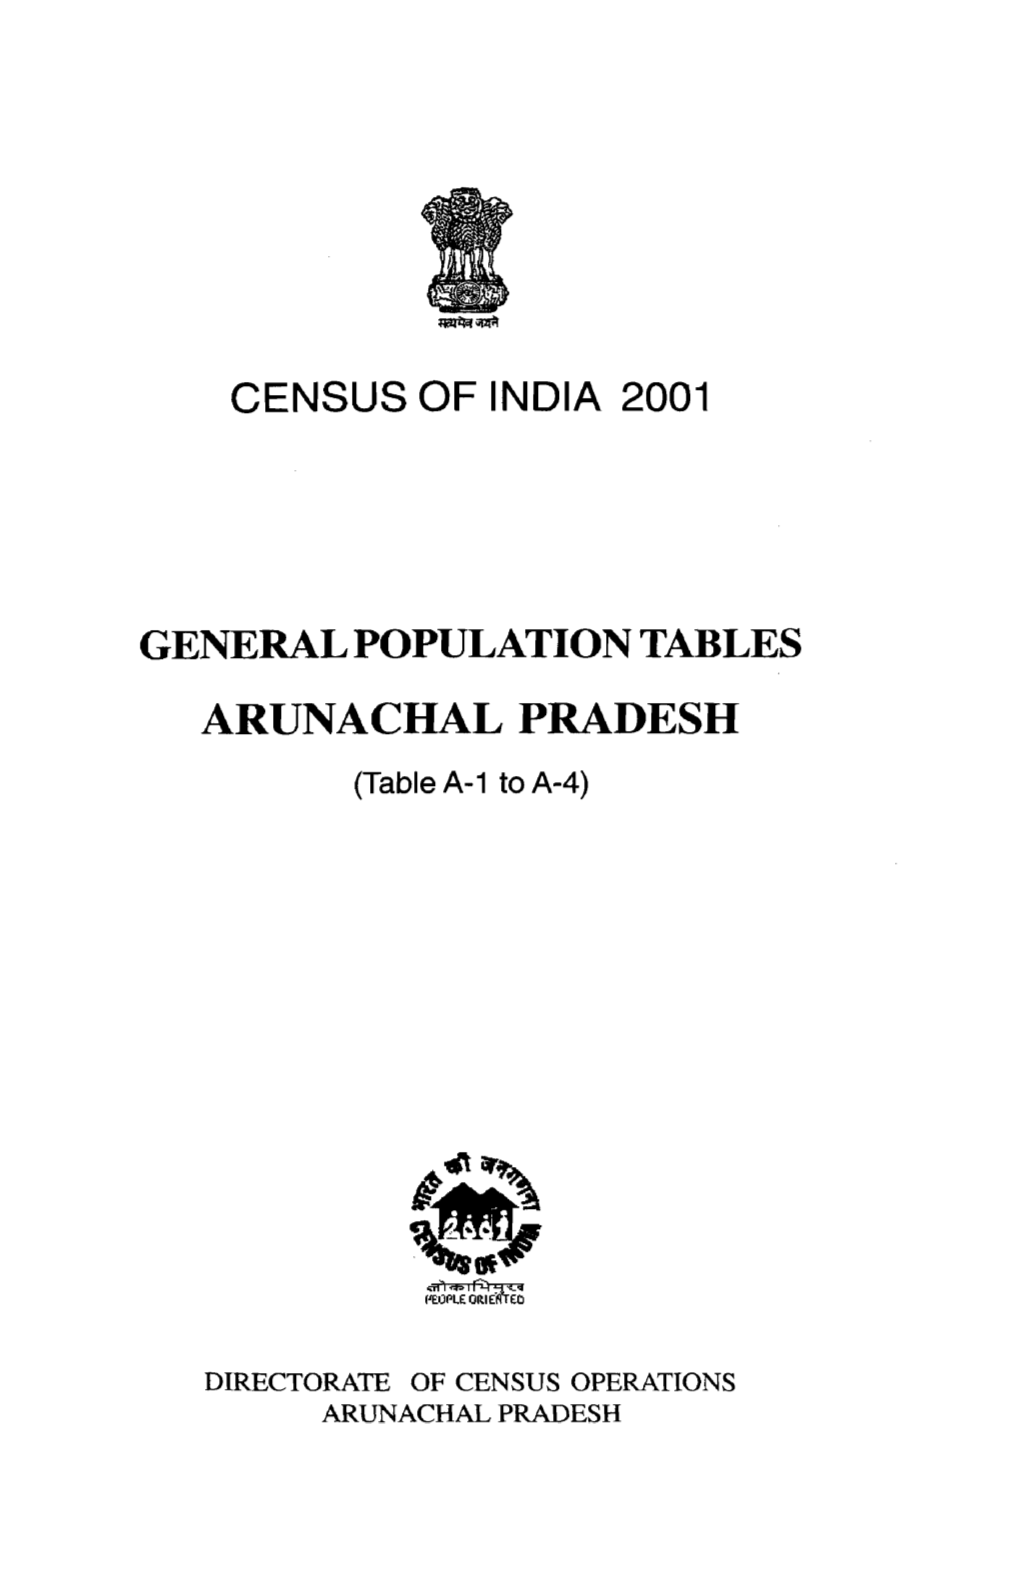 General Population Tables, Series-13, Arunachal Pradesh